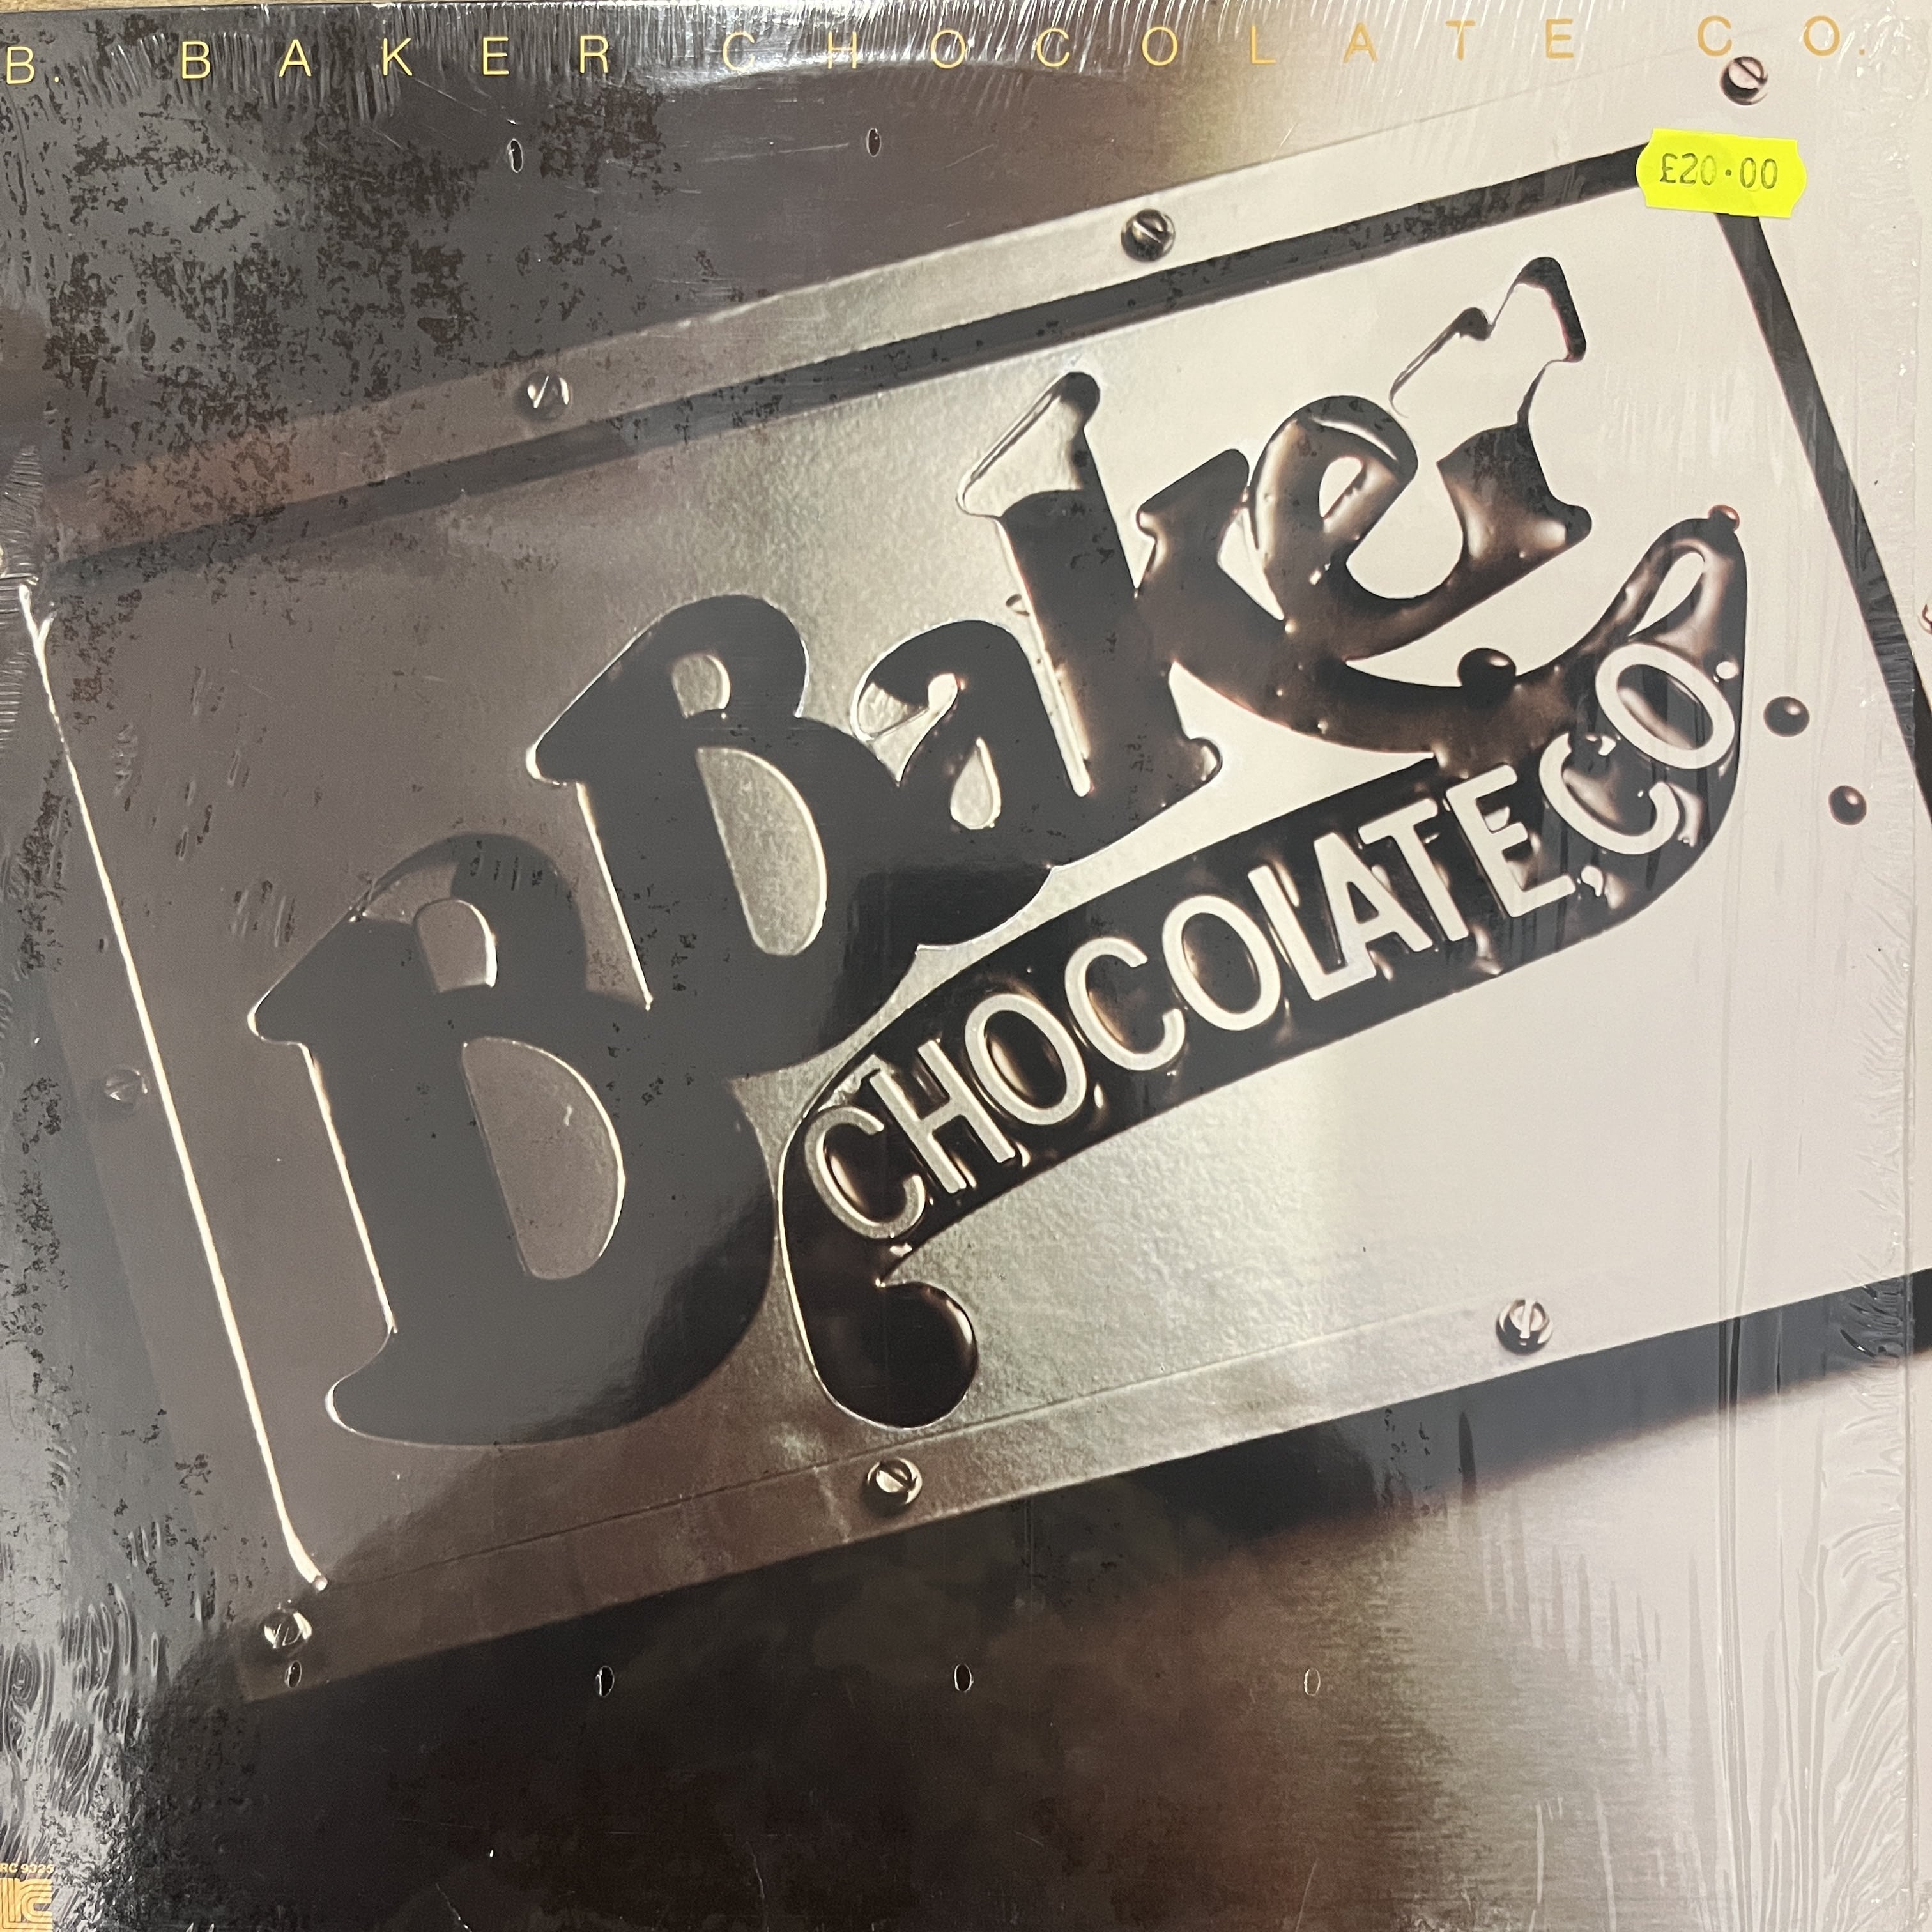 B Baker Chocolate Co.